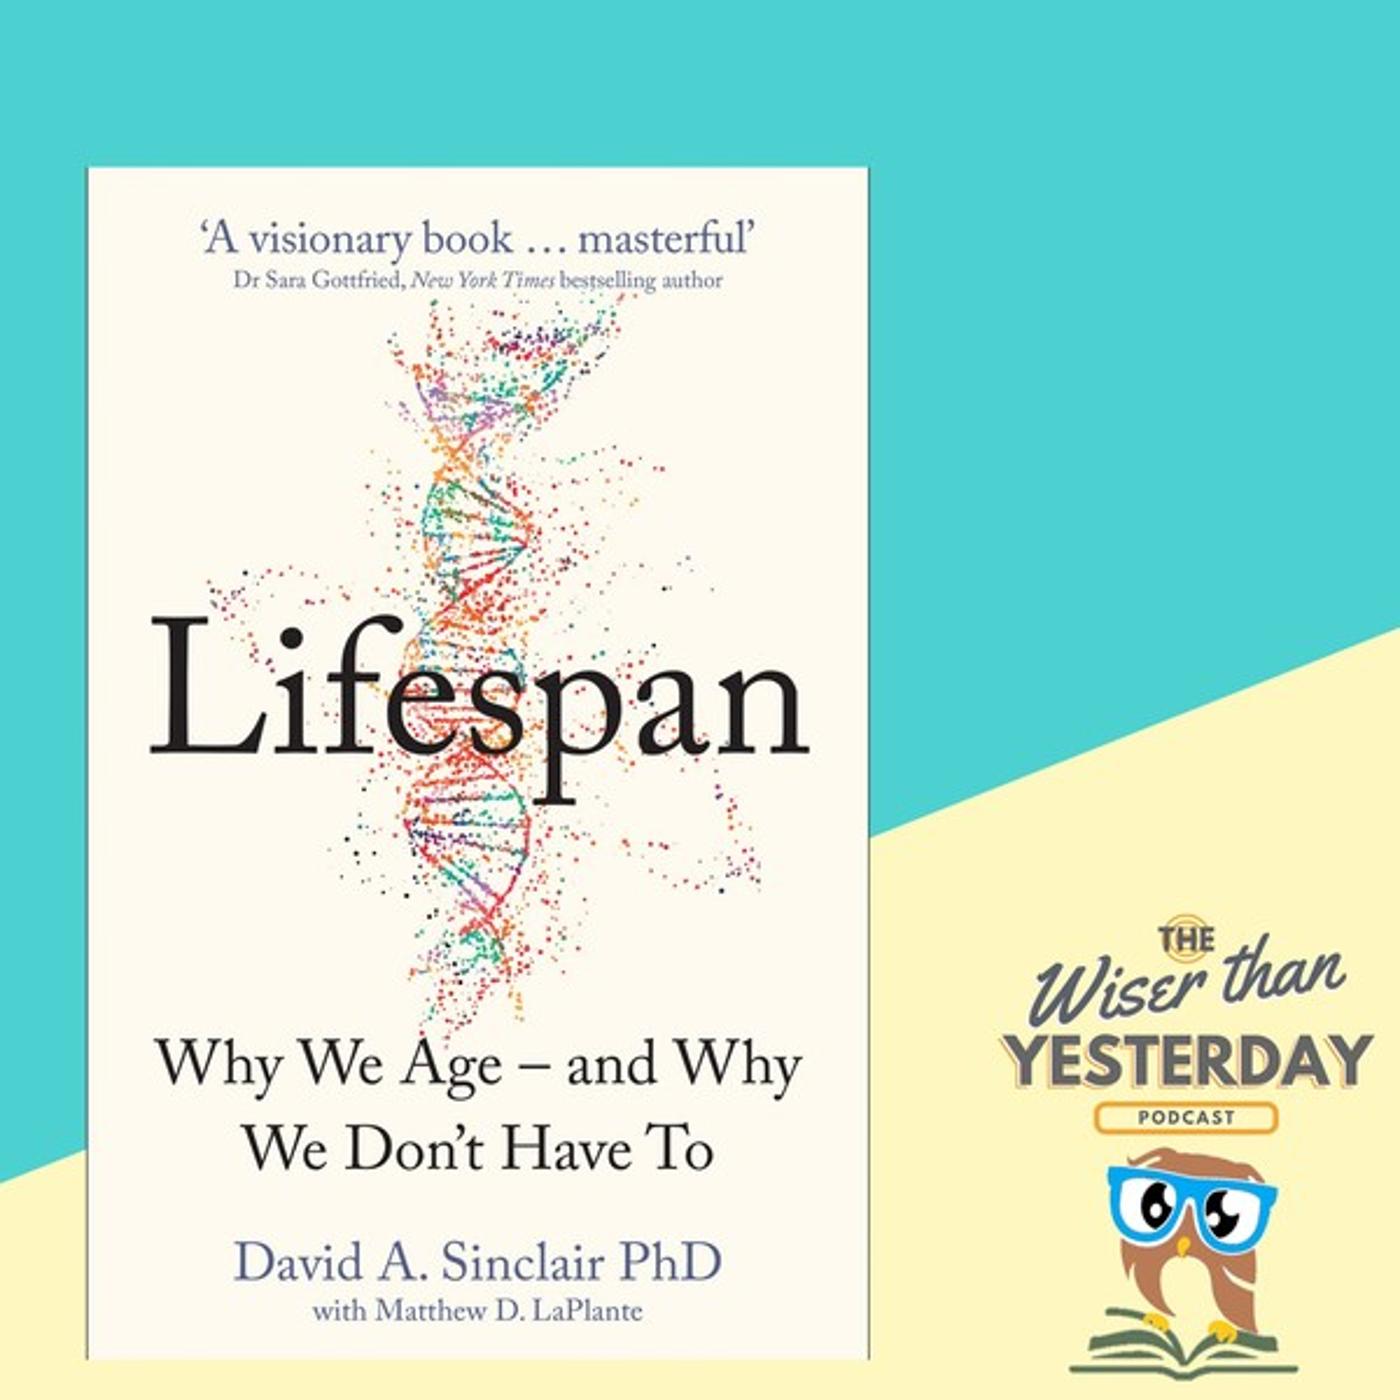 Body: Lifespan by Dr. Savid Sinclair